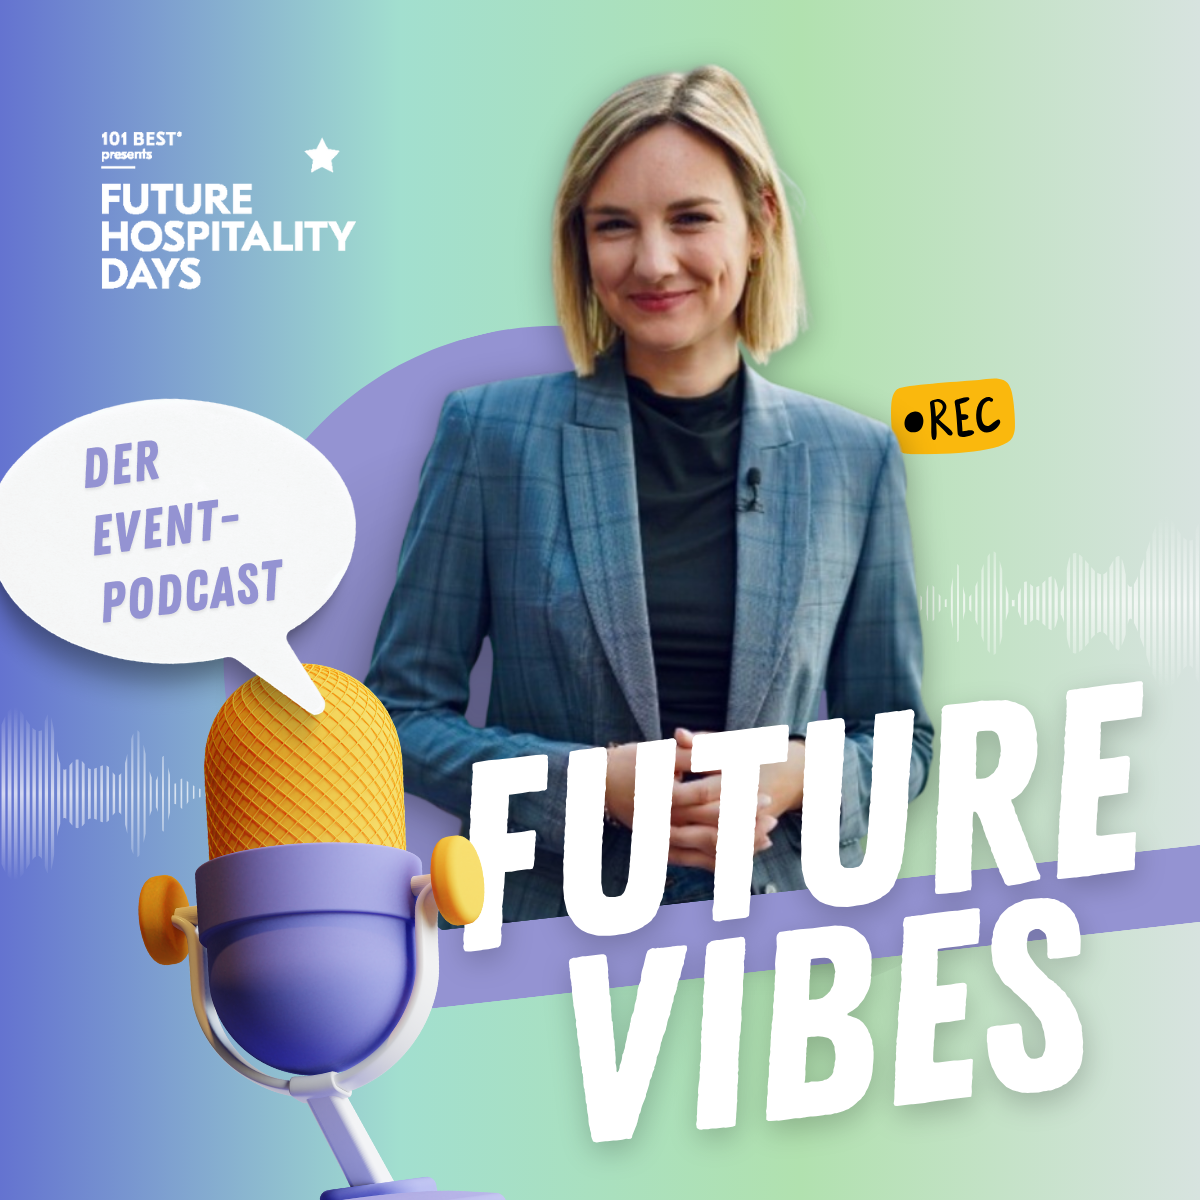 Future Vibes – der Podcast zu den Future Hospitality Days